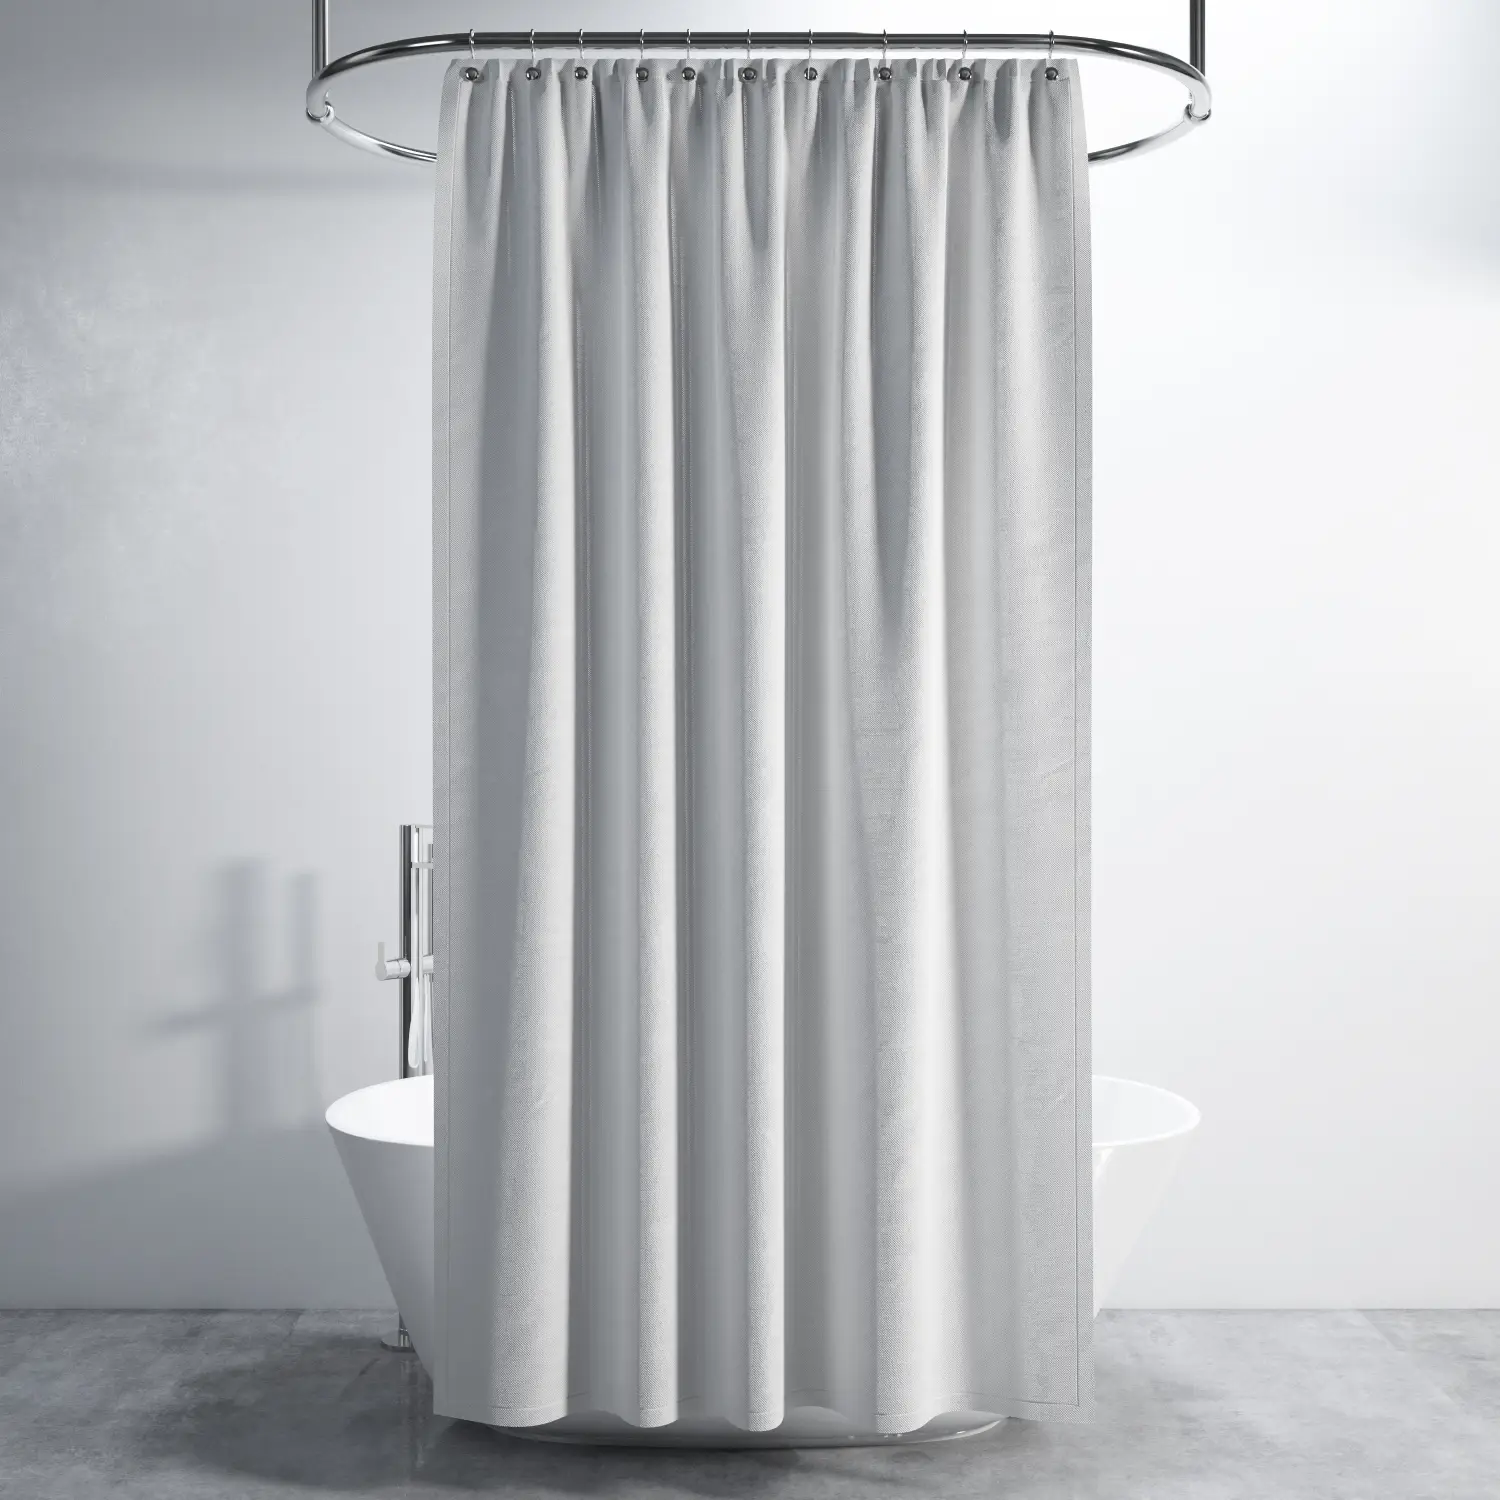 Shower Curtains Dubai